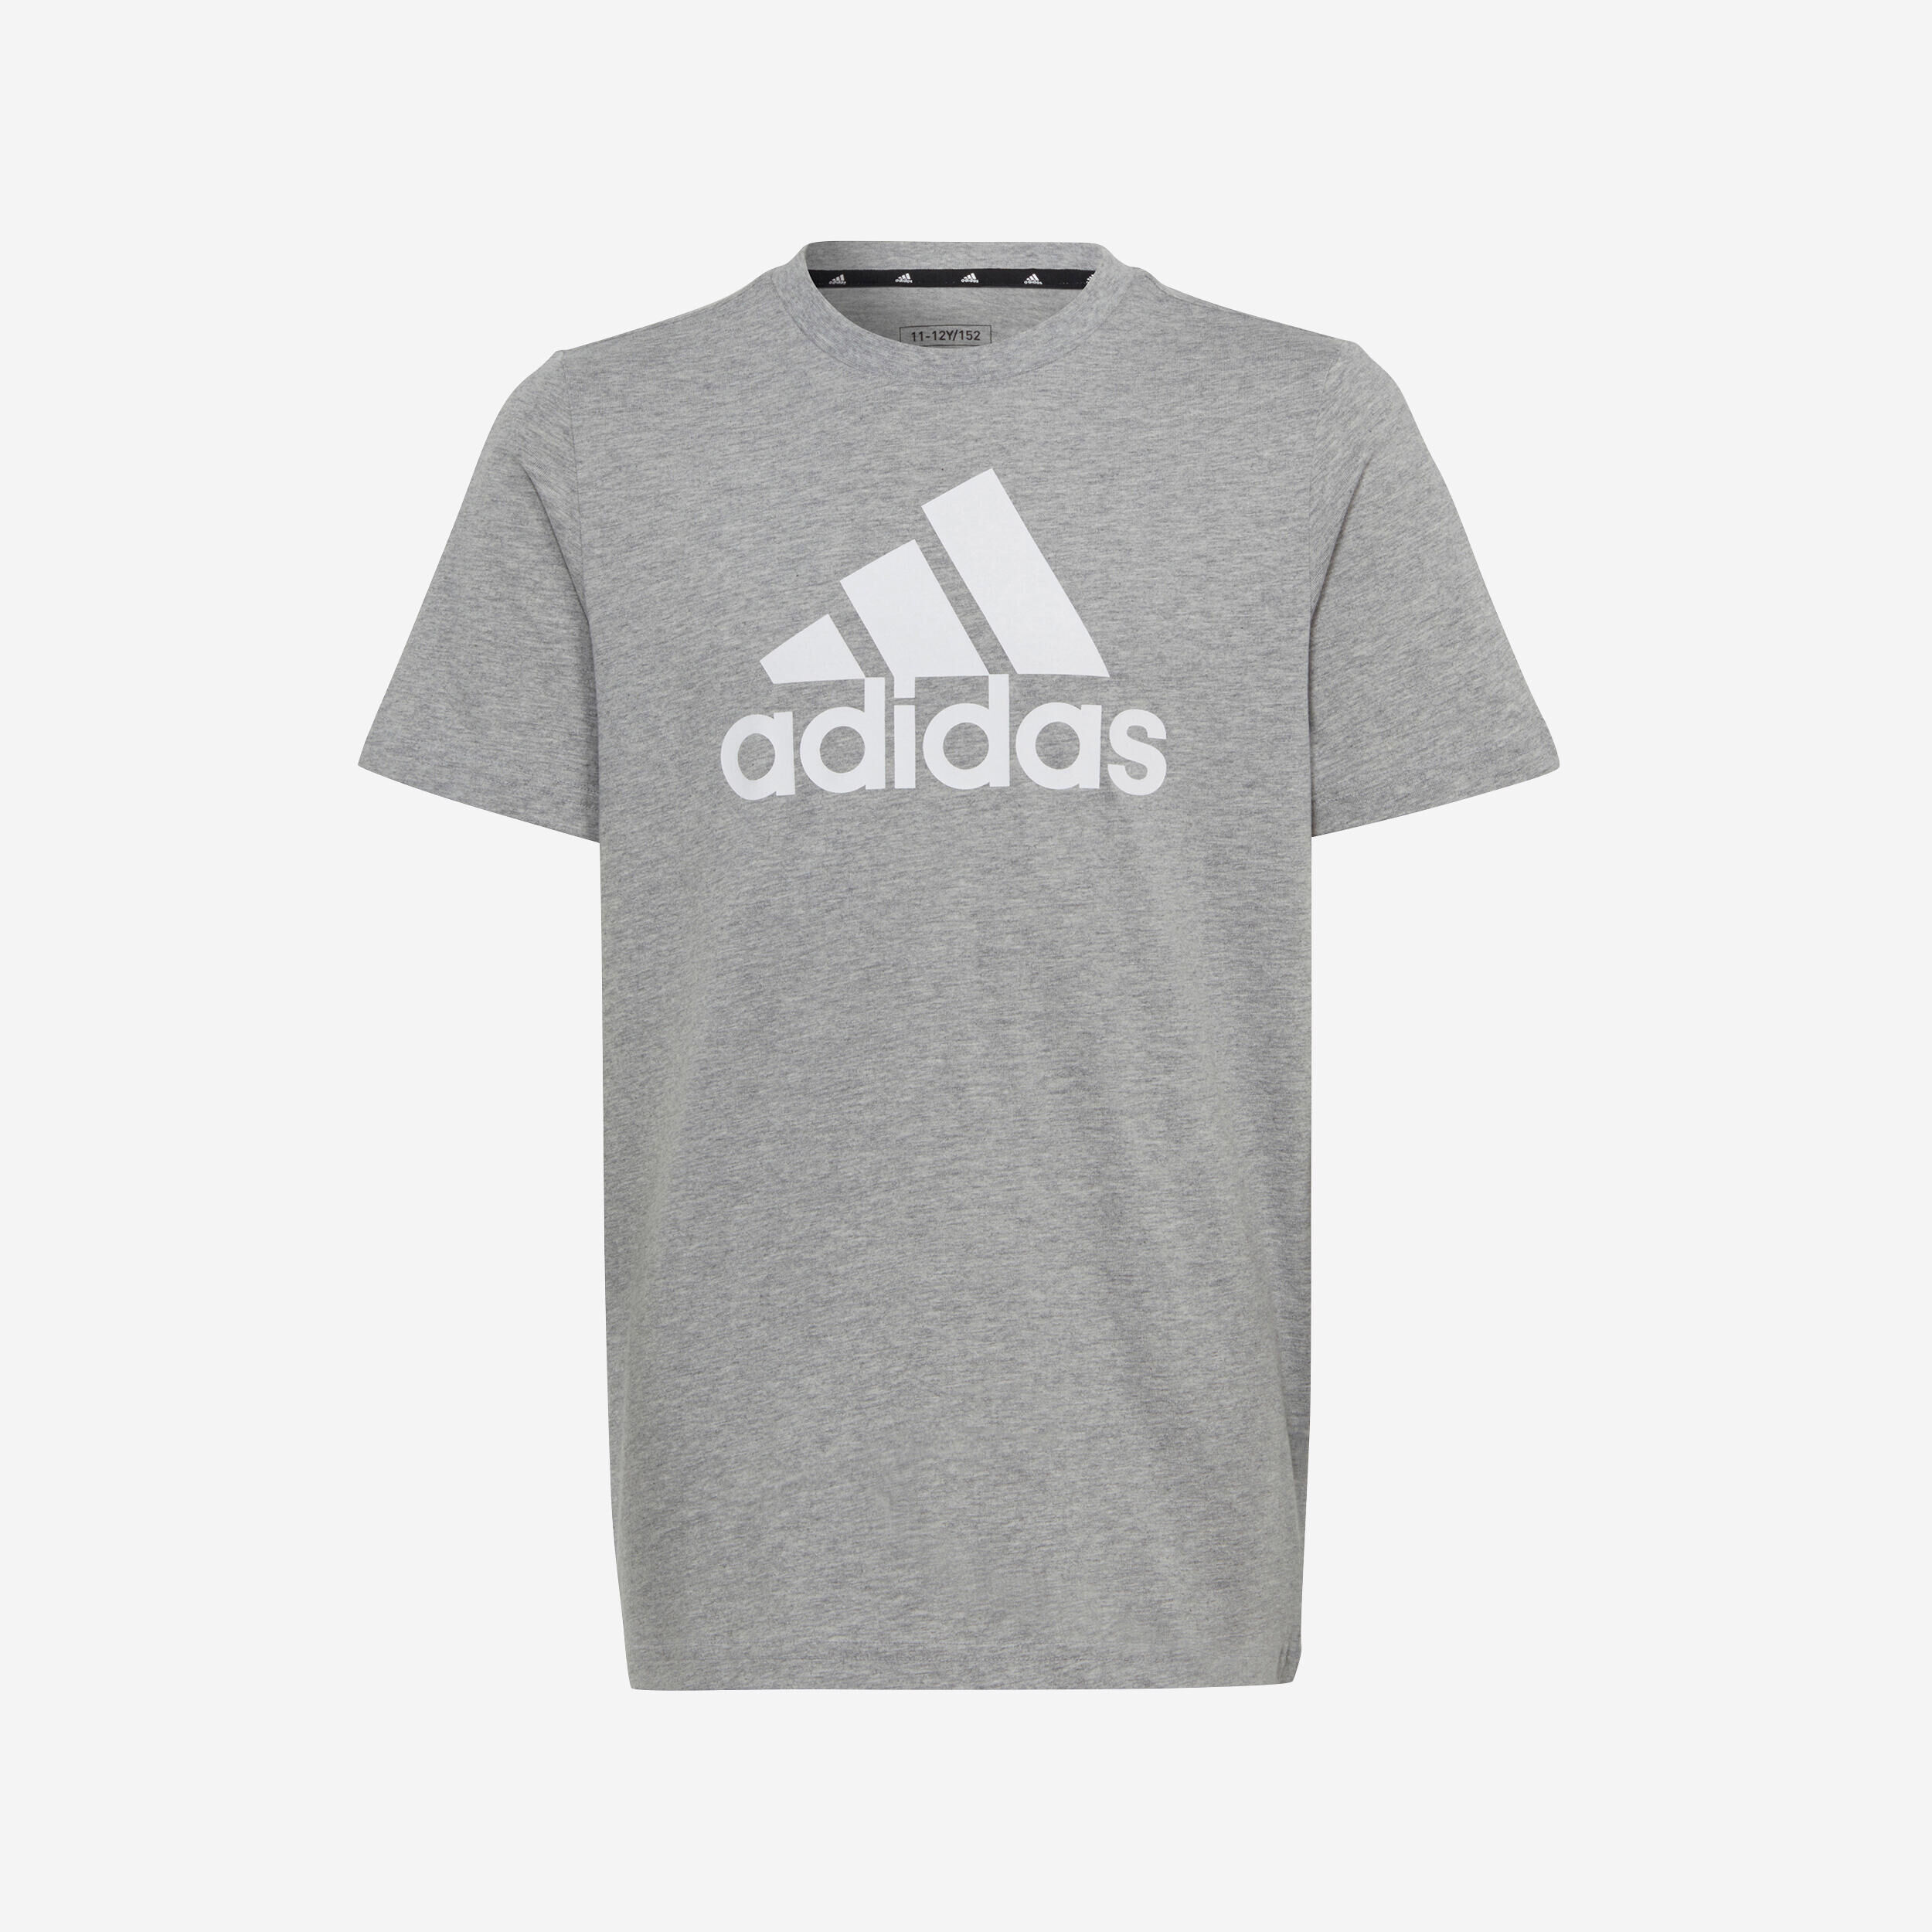 ADIDAS T-Shirt - Grey/White Logo